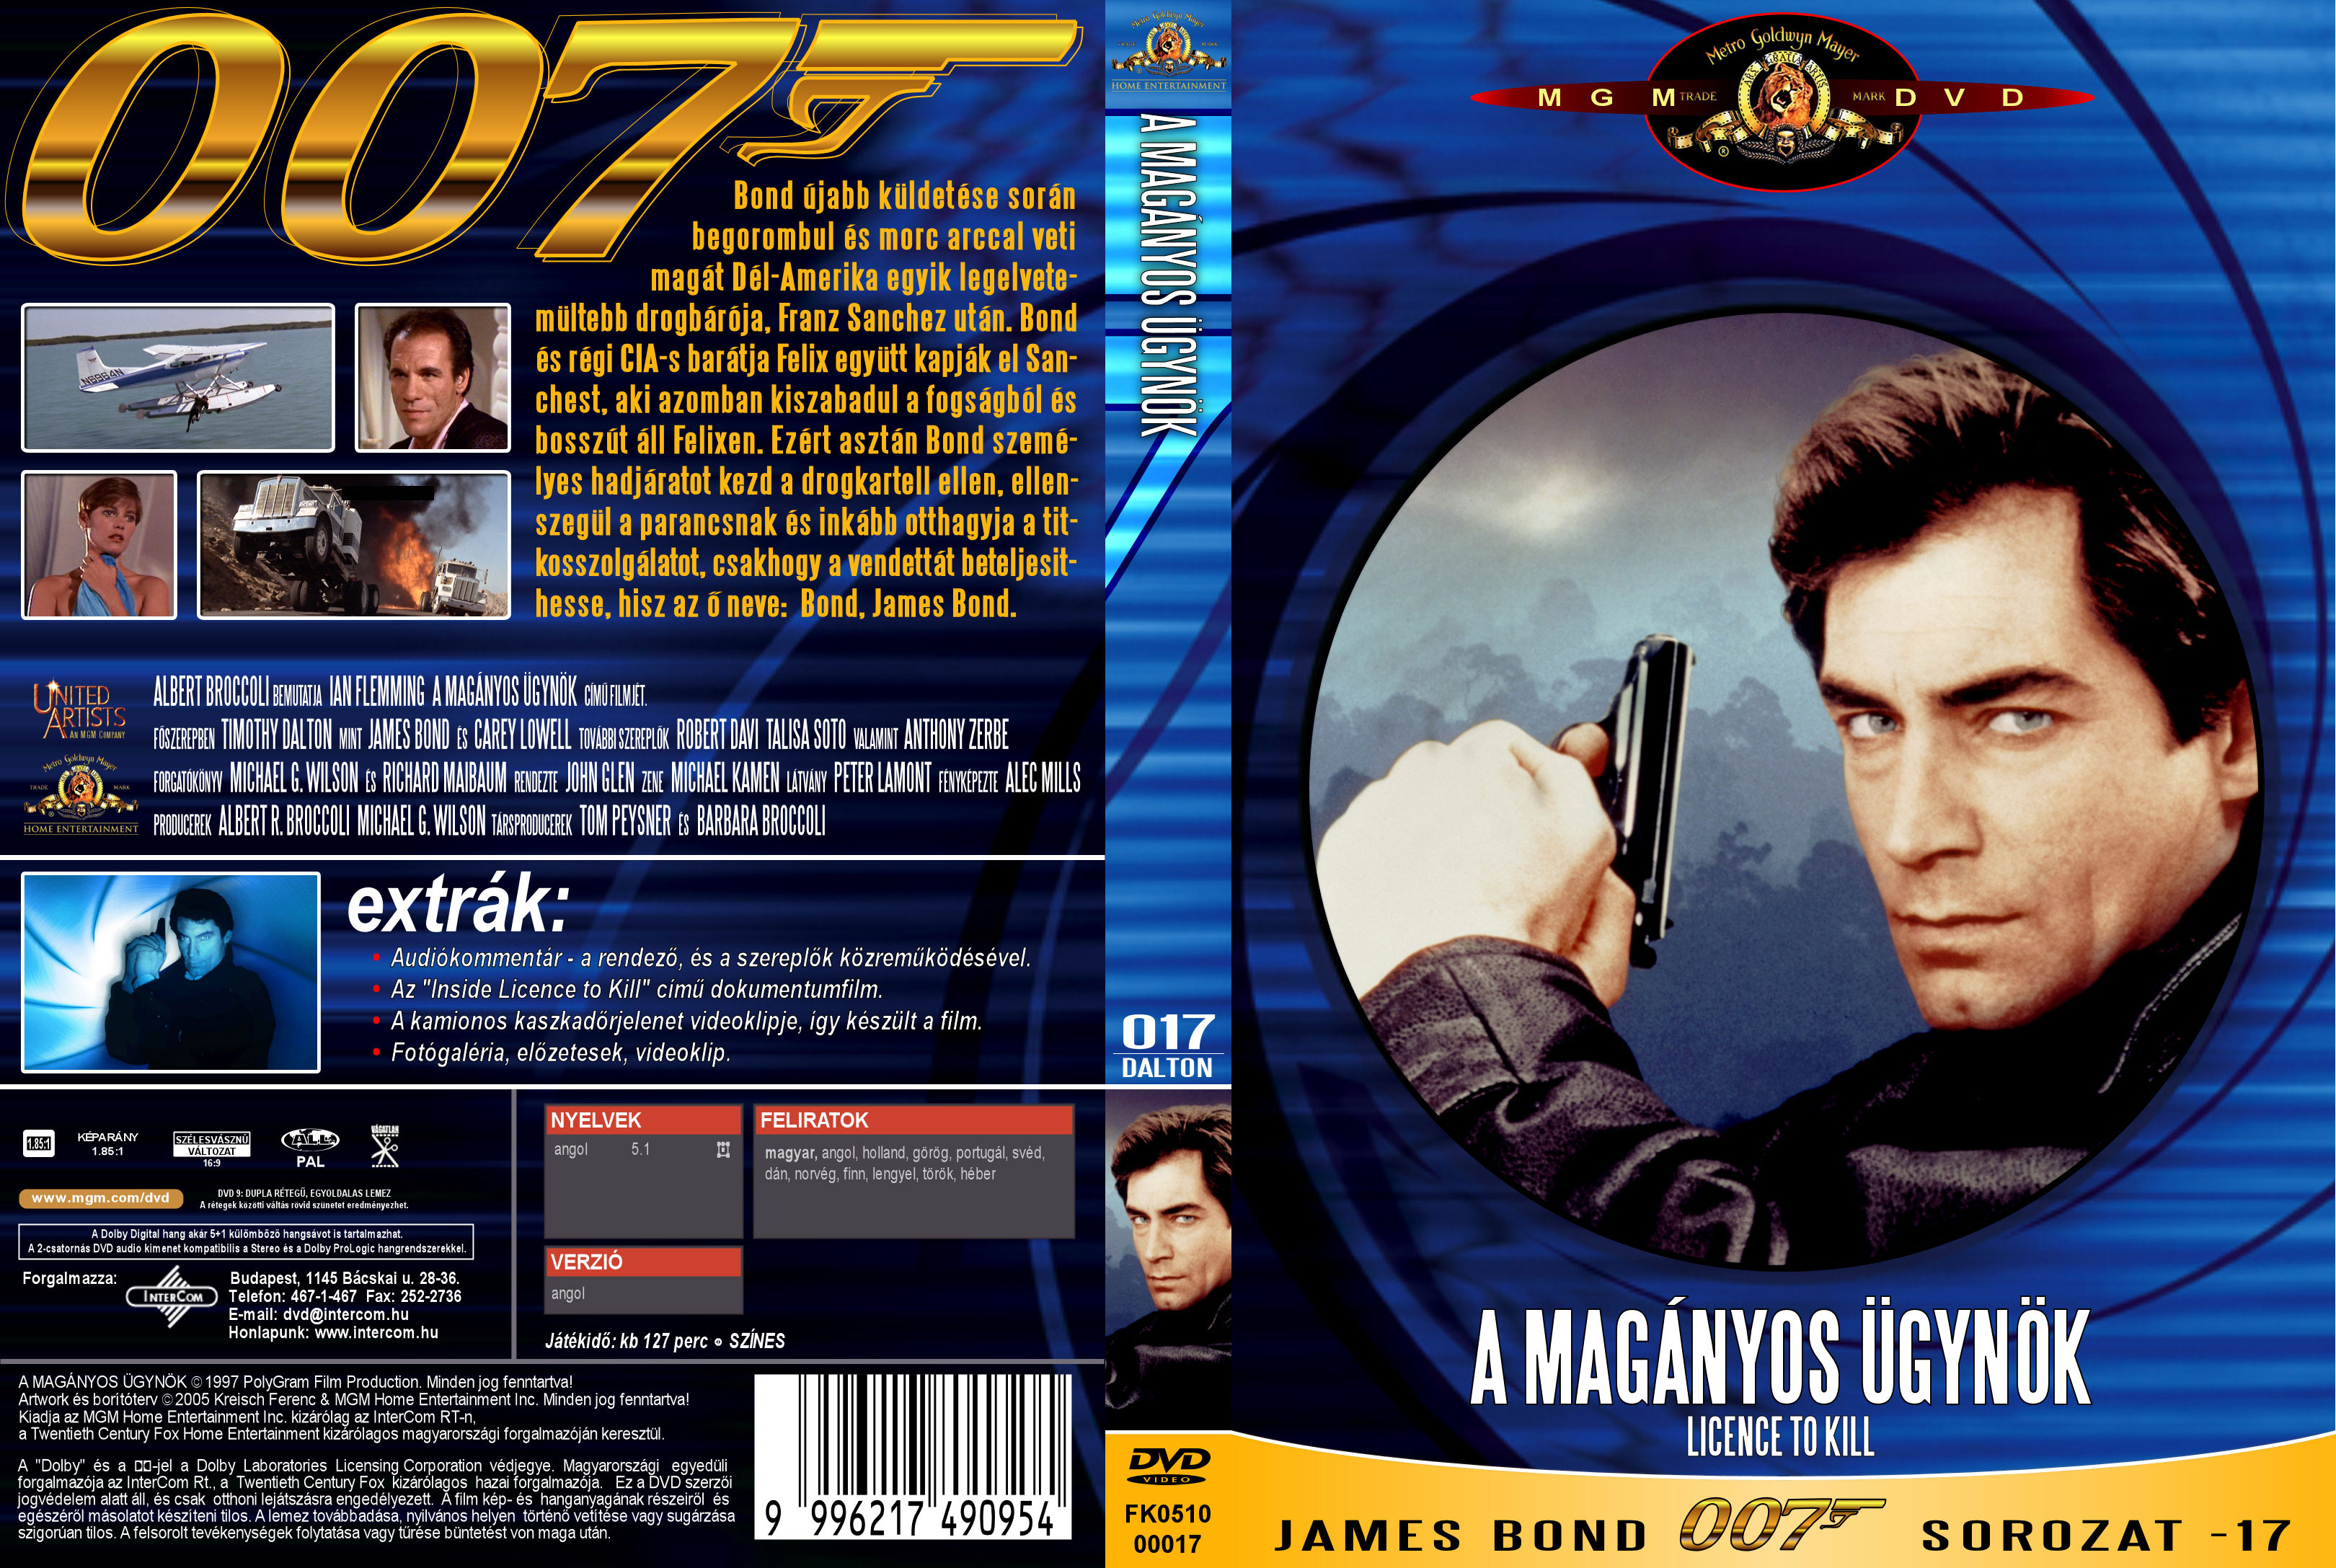 James Bond - A magnyos gynk